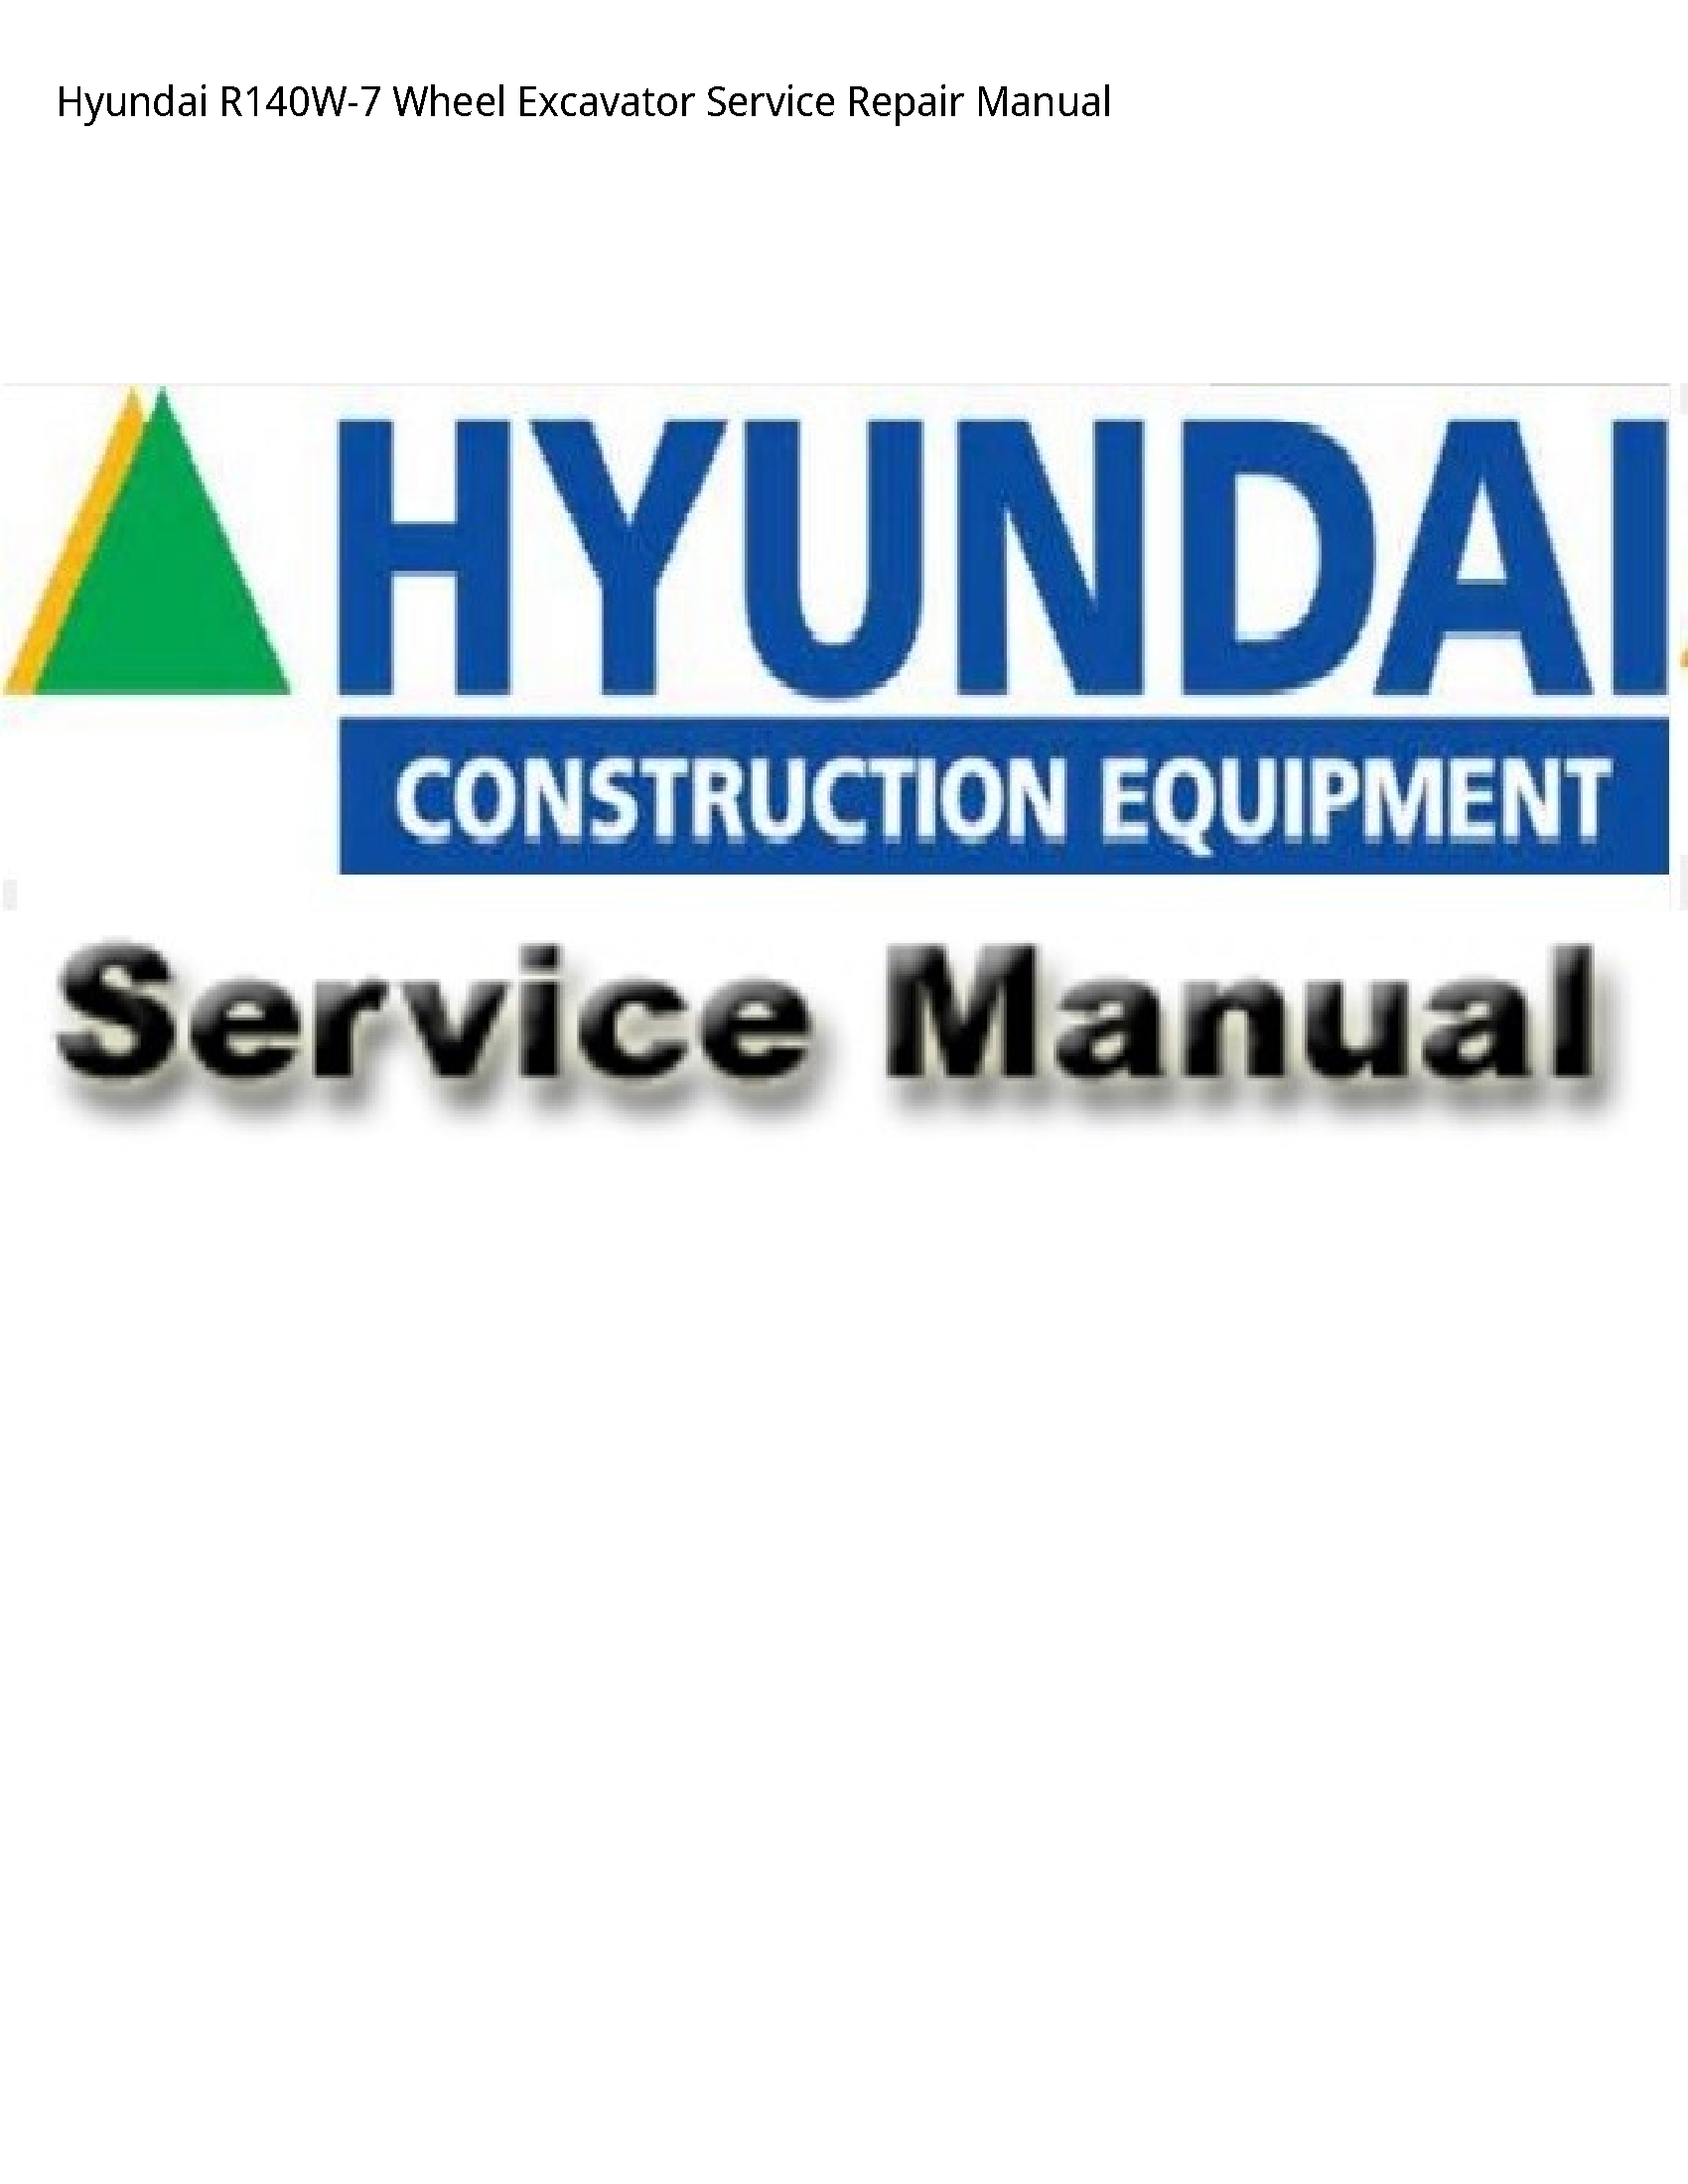 Hyundai R140W-7 Wheel Excavator manual